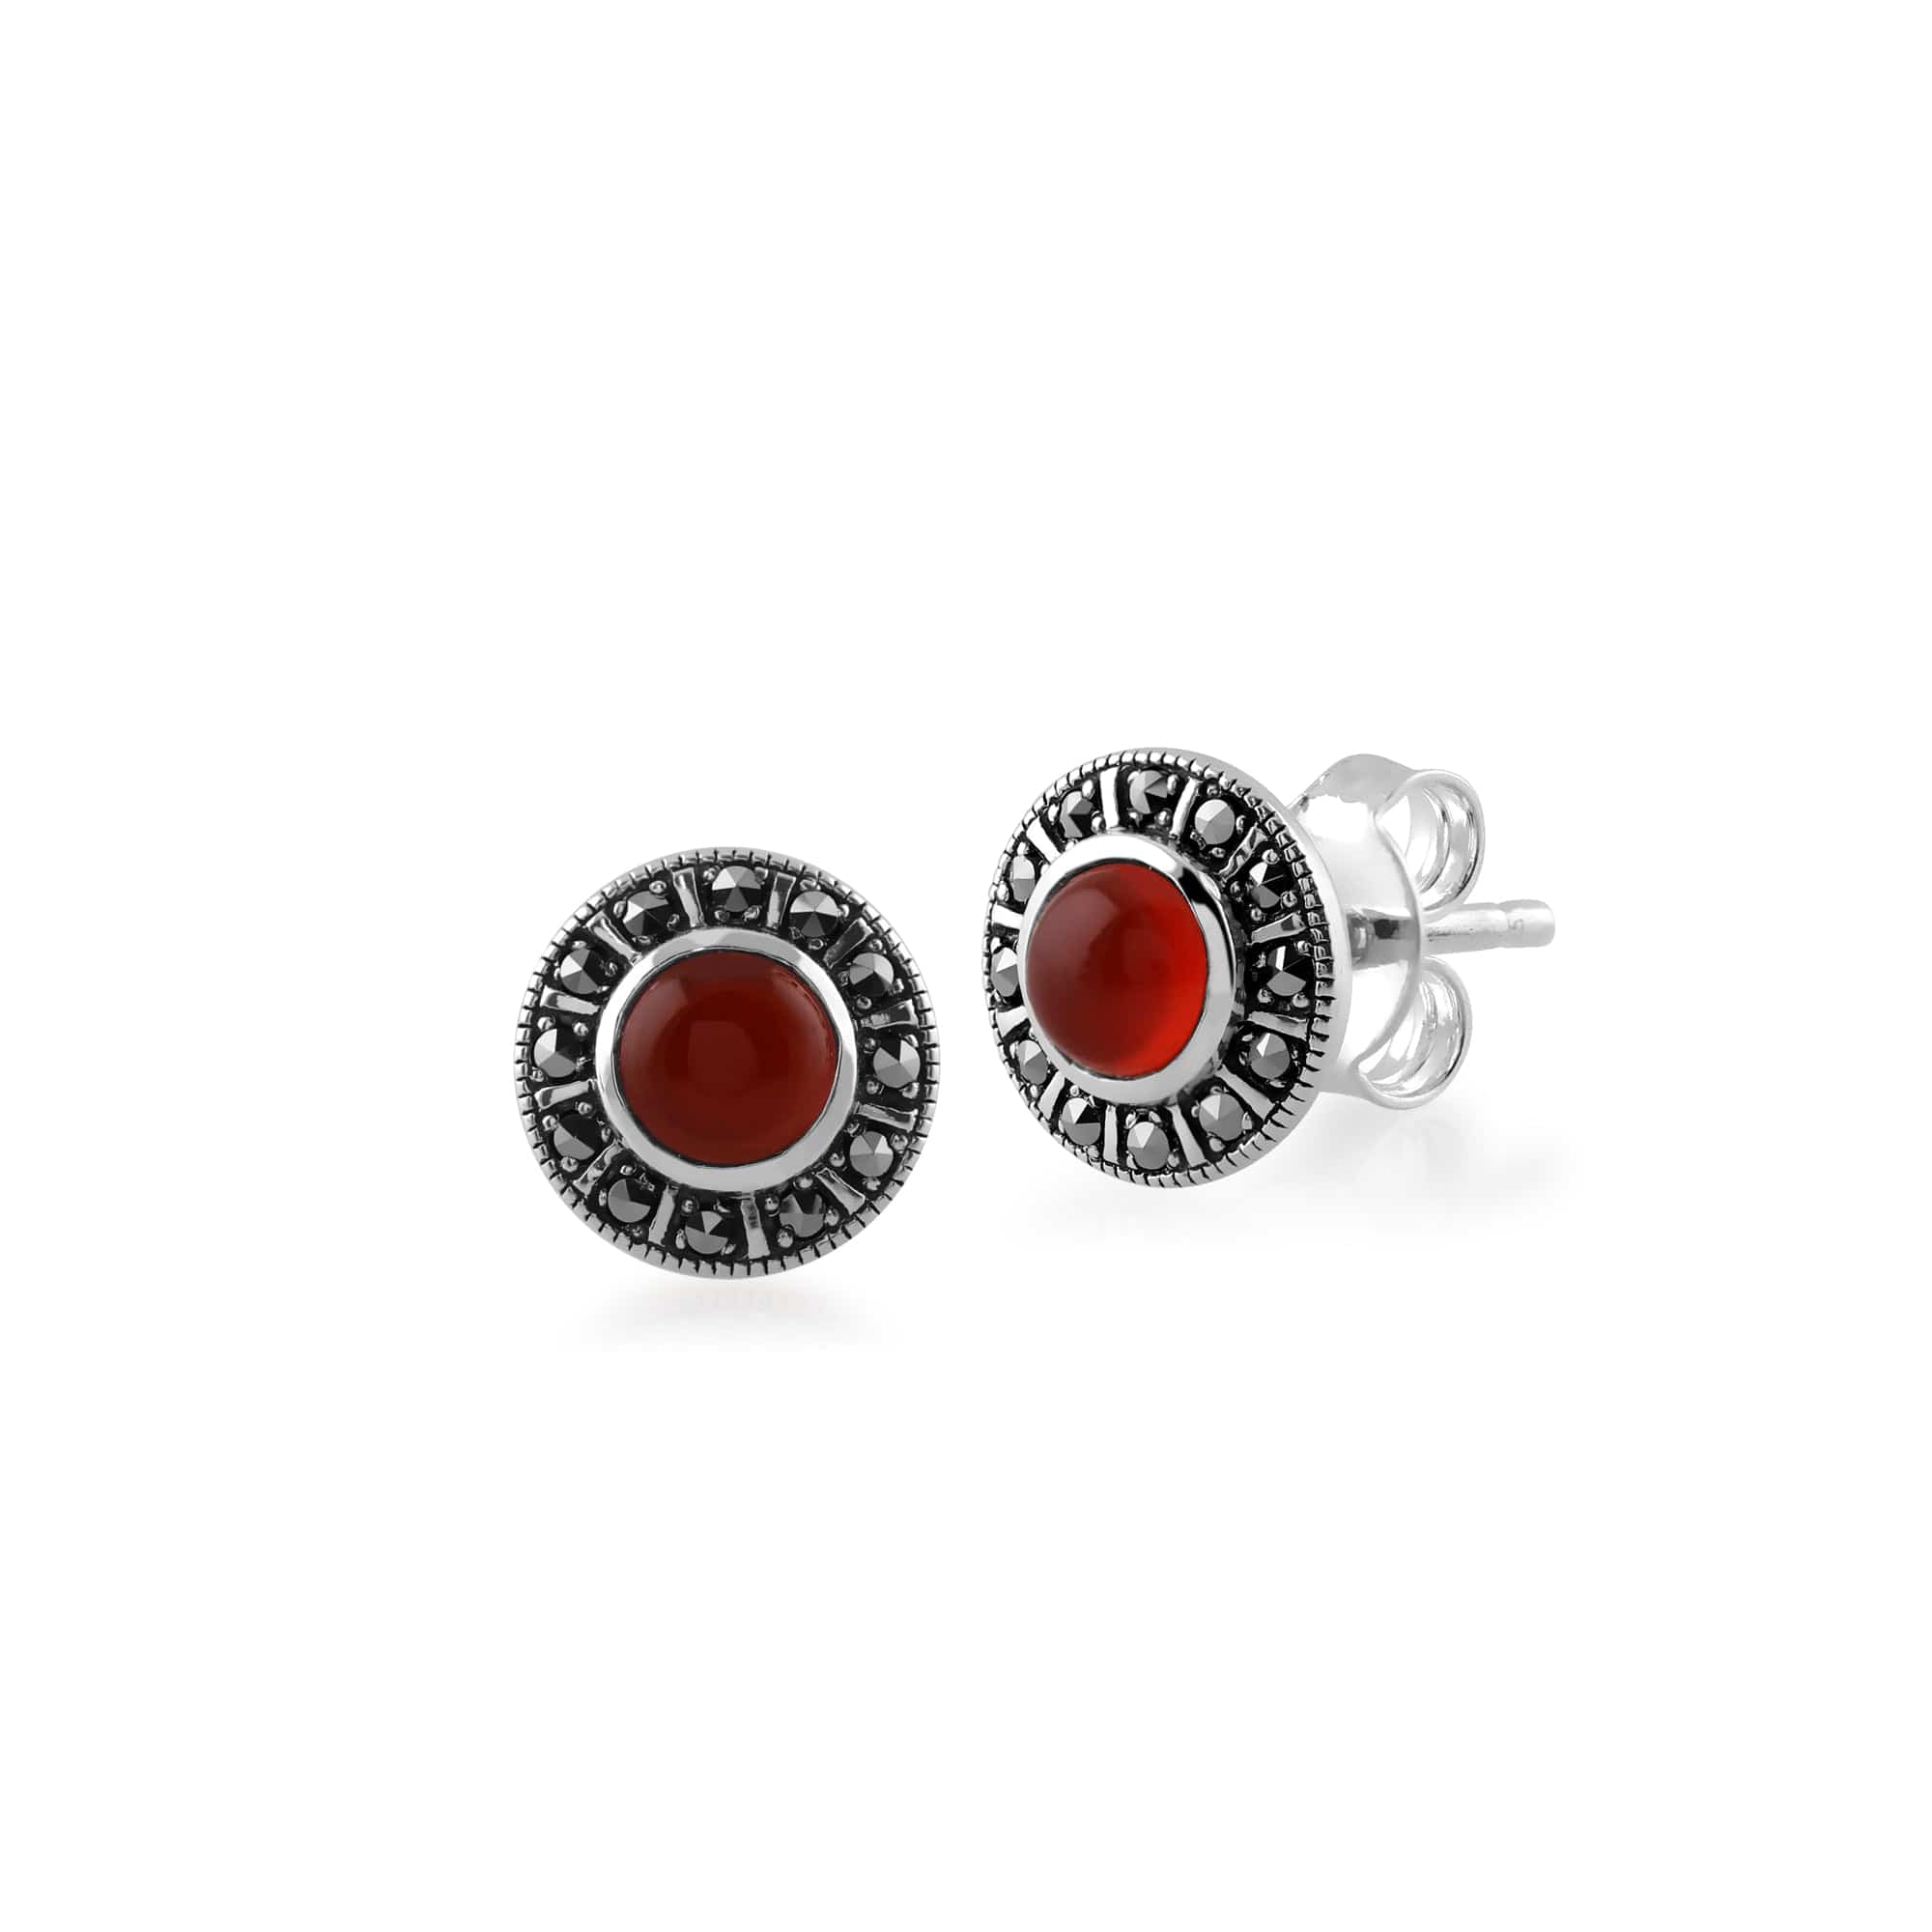 Art Deco Style Round Red Carnelian & Marcasite Halo Stud Earrings in 925 Sterling Silver - Gemondo